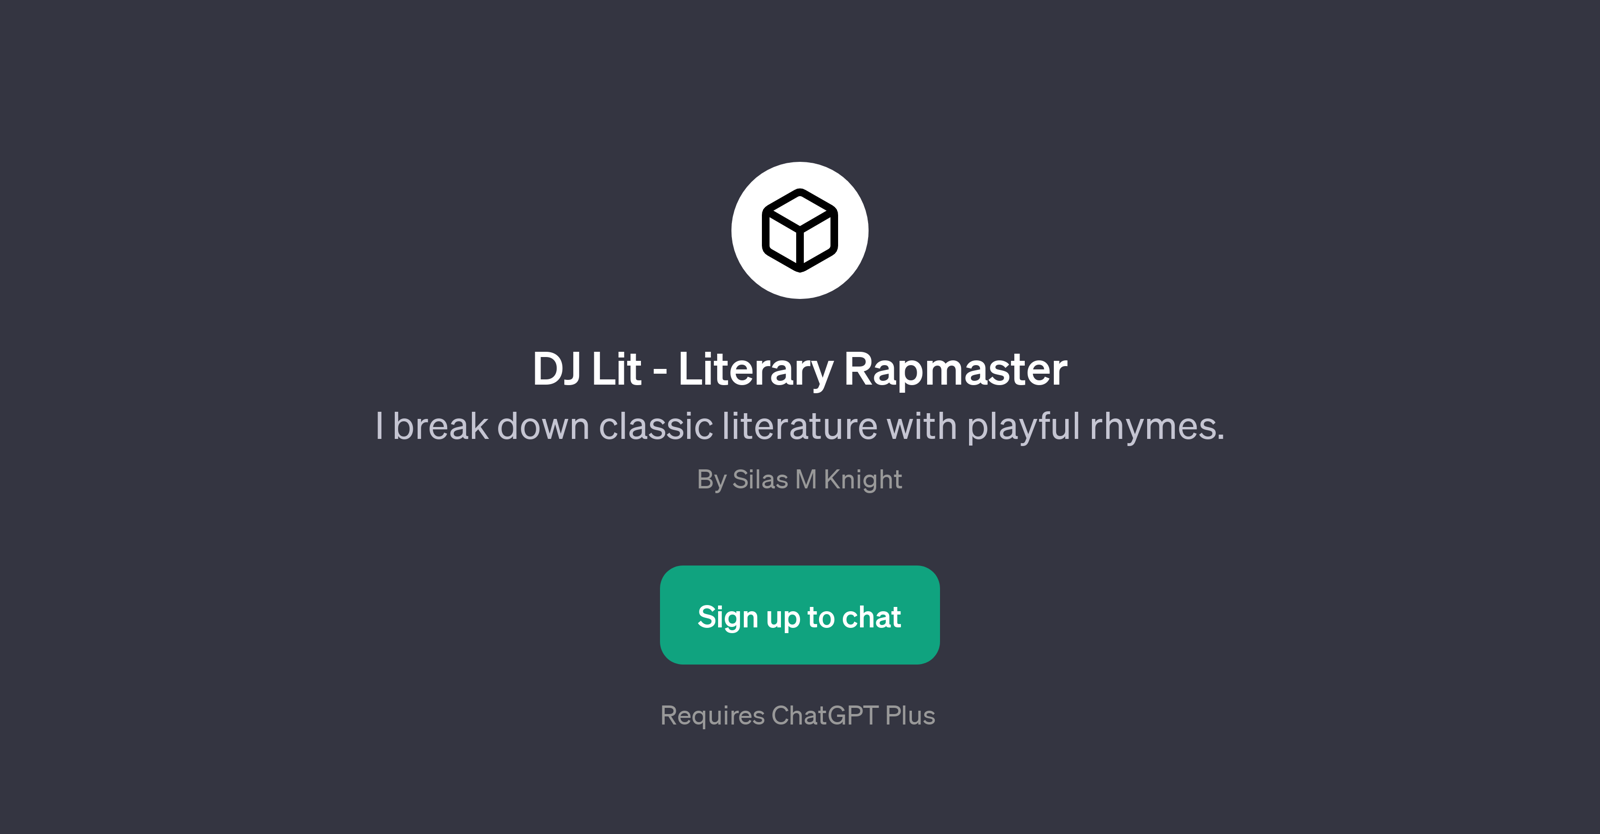 DJ Lit - Literary Rapmaster website